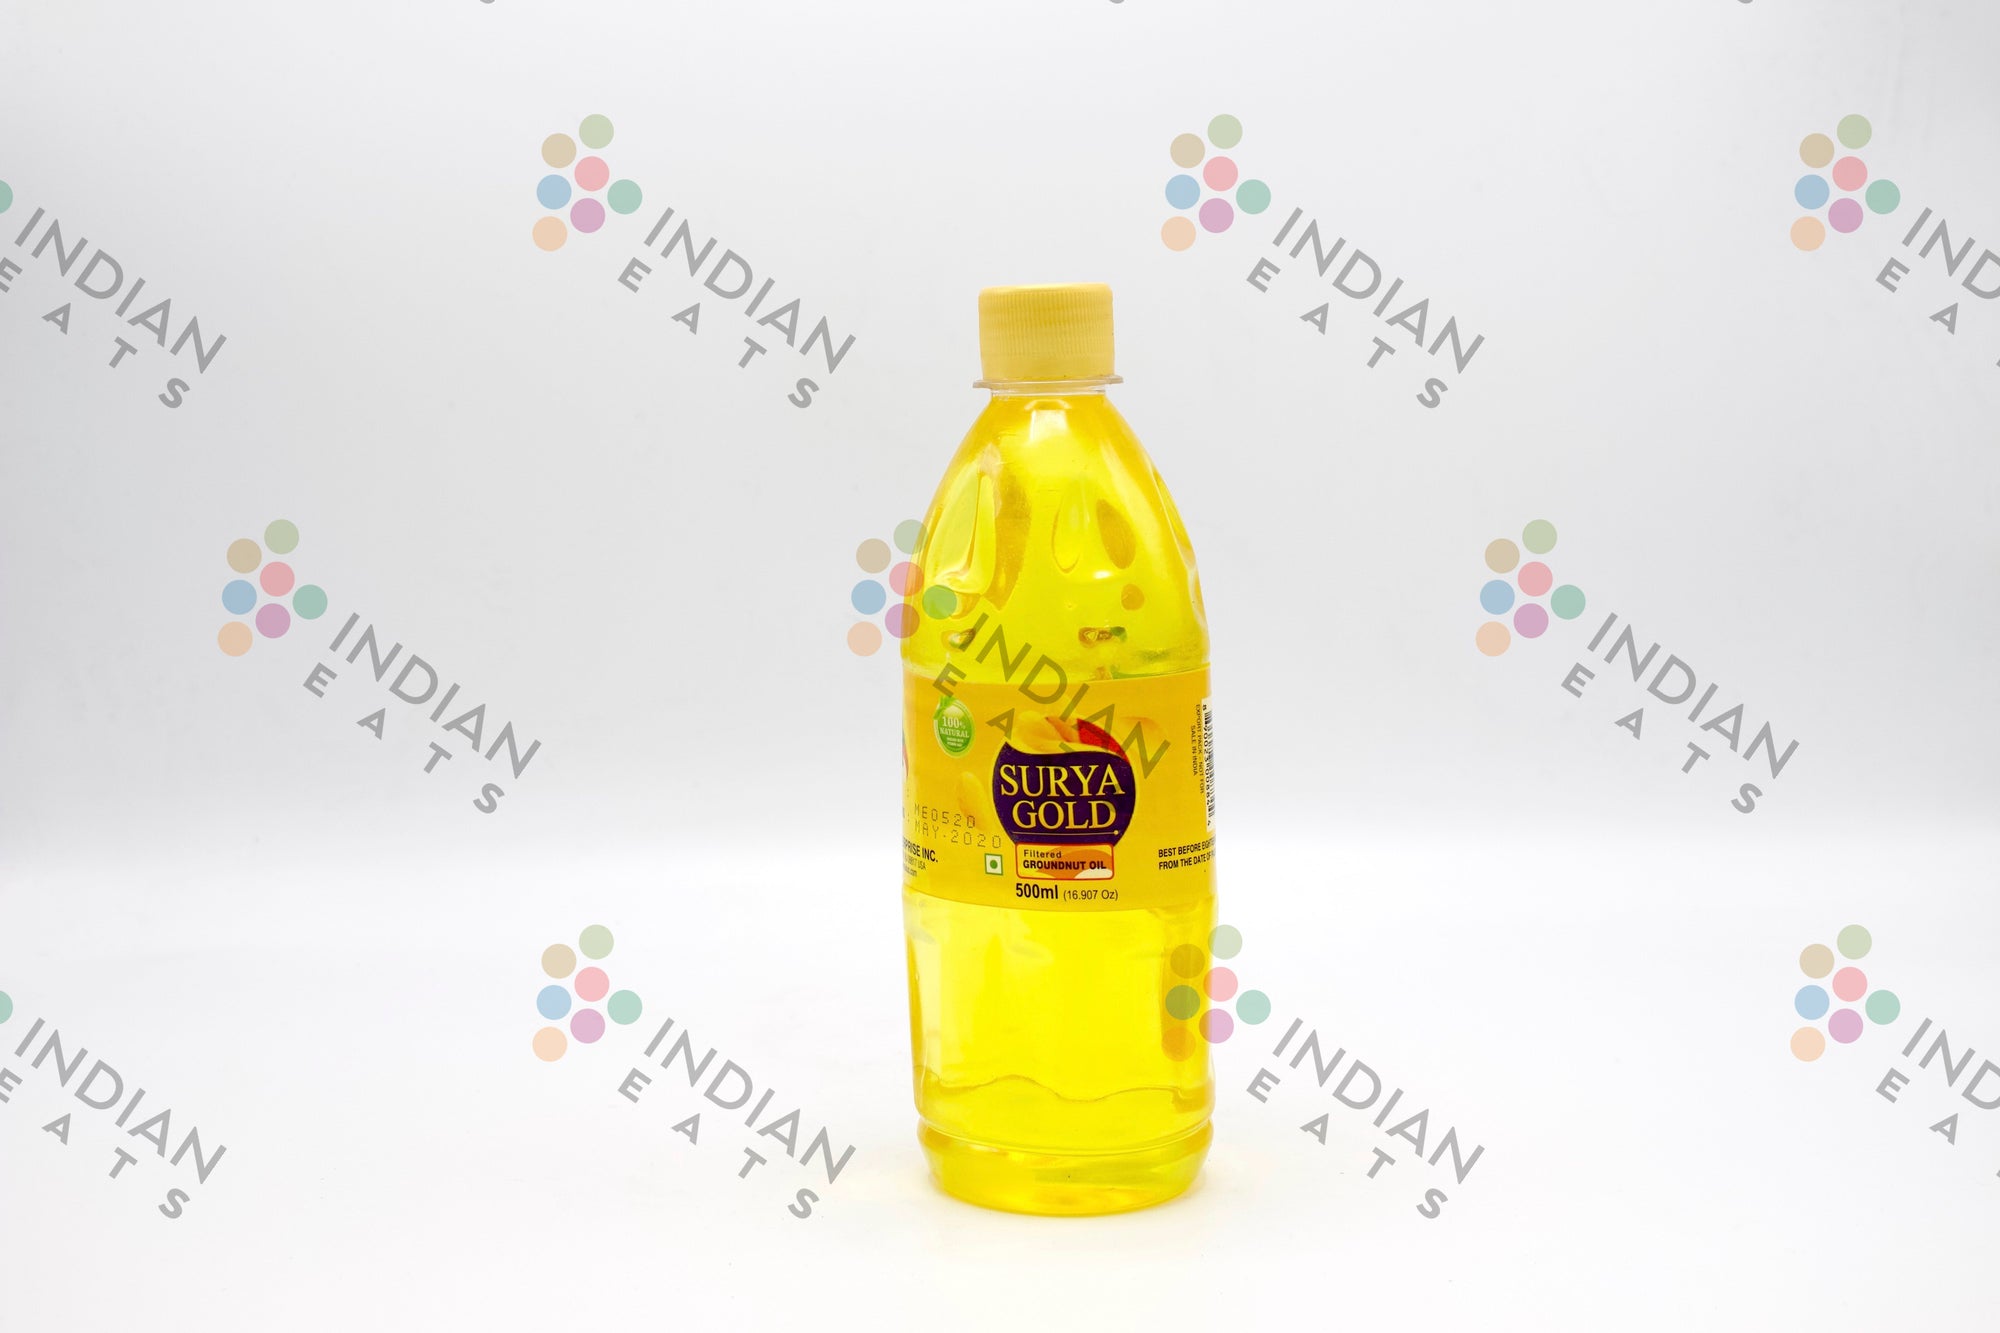 Surya Gold Peanut Oil (Groundnut Oil)